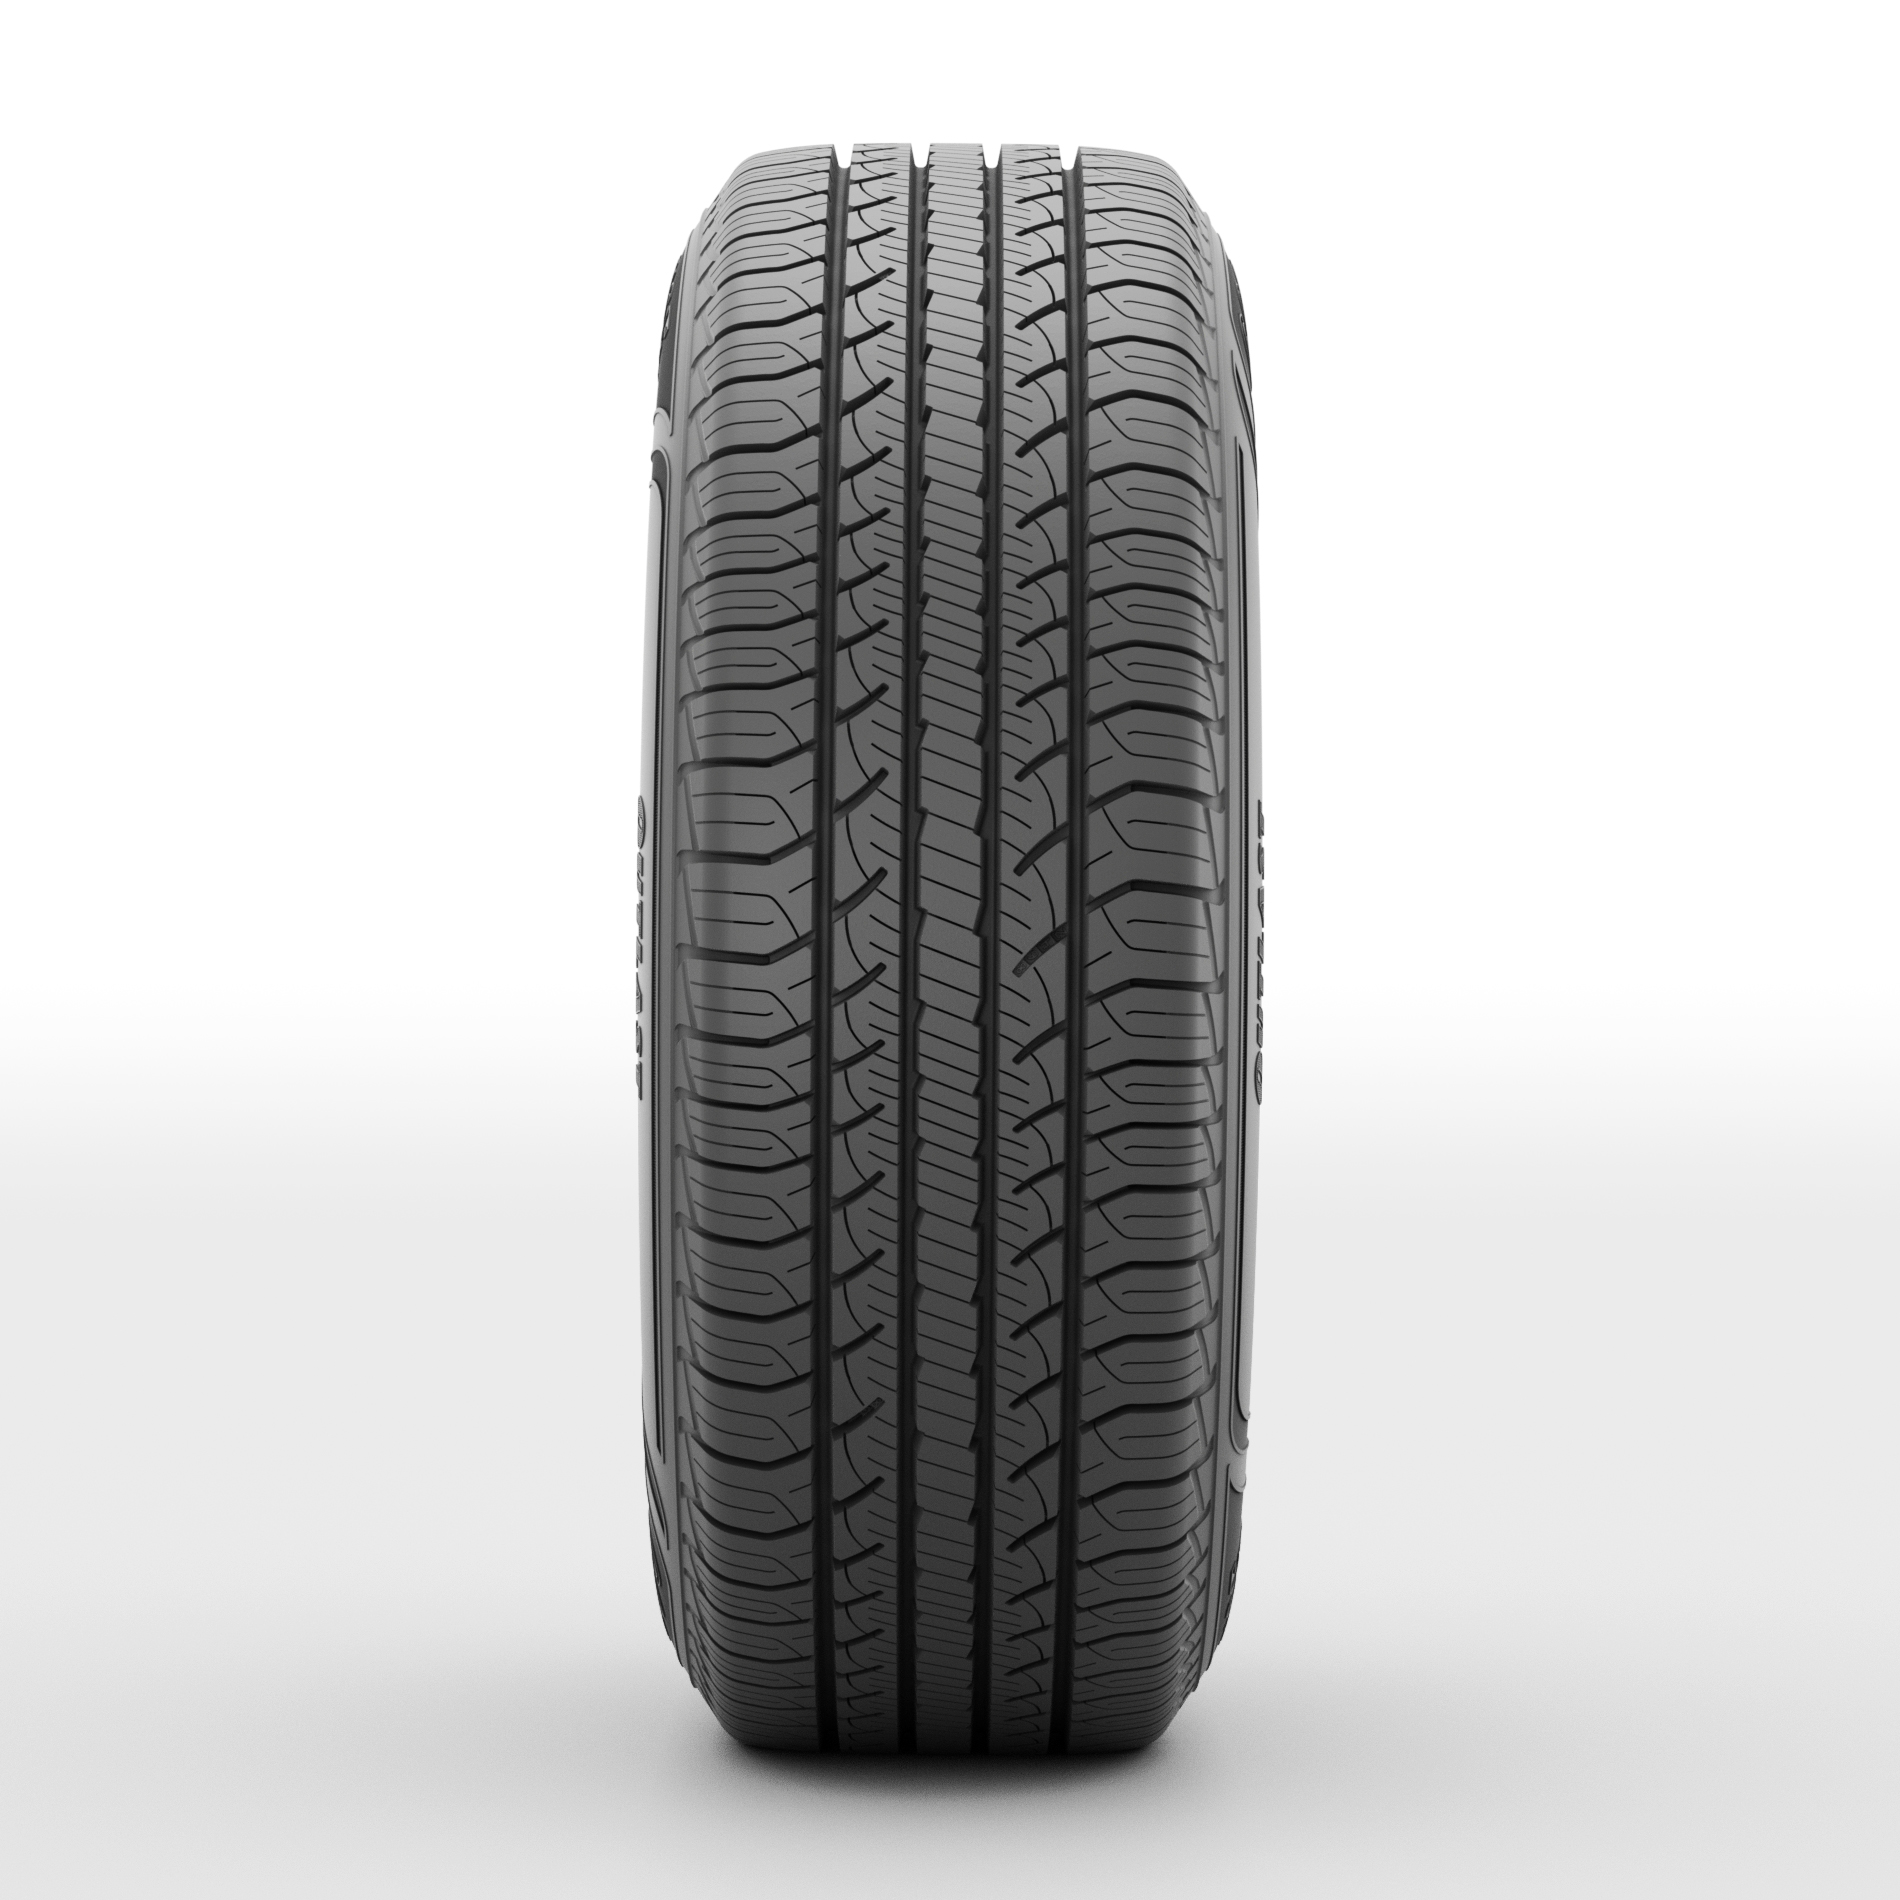 Goodyear Assurance Outlast 245/60R18 105H All-Season Tire 